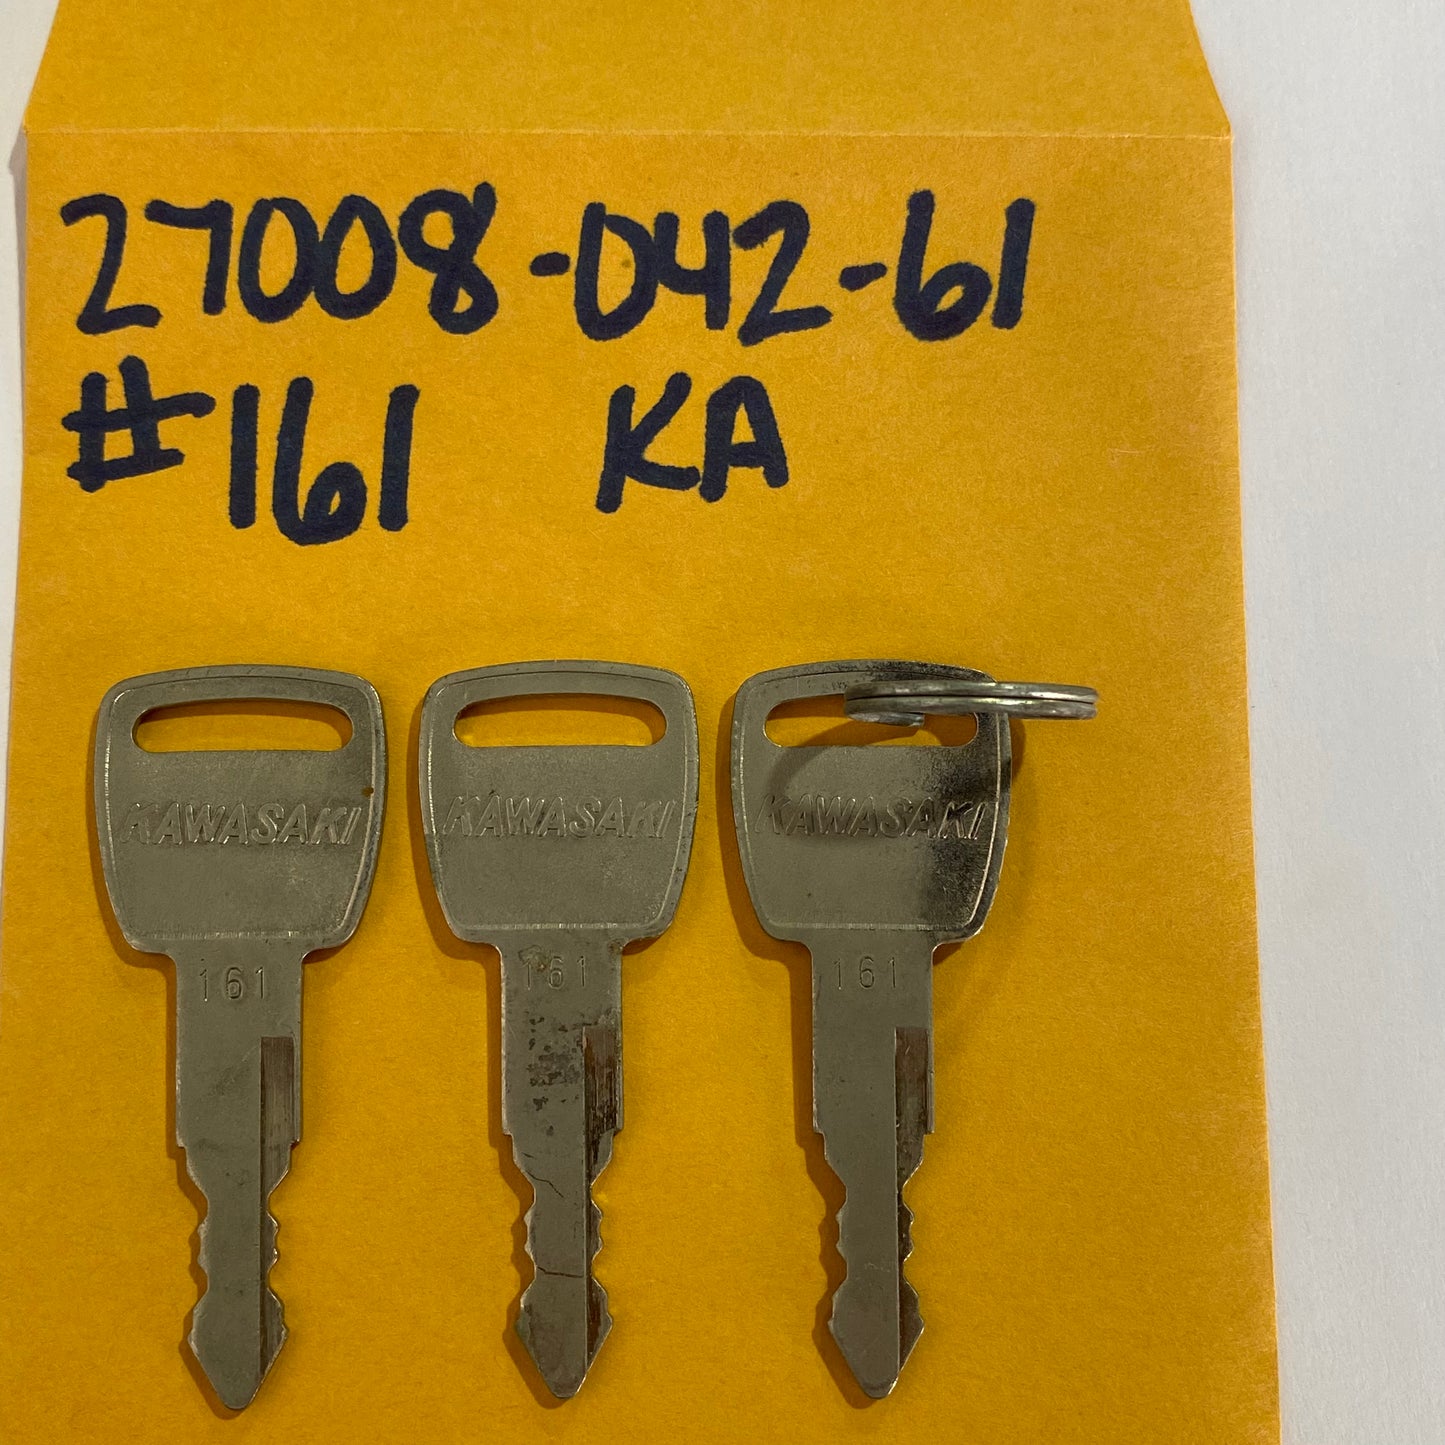 Kawasaki Key Set #161 27008-042-61 (set of 3)